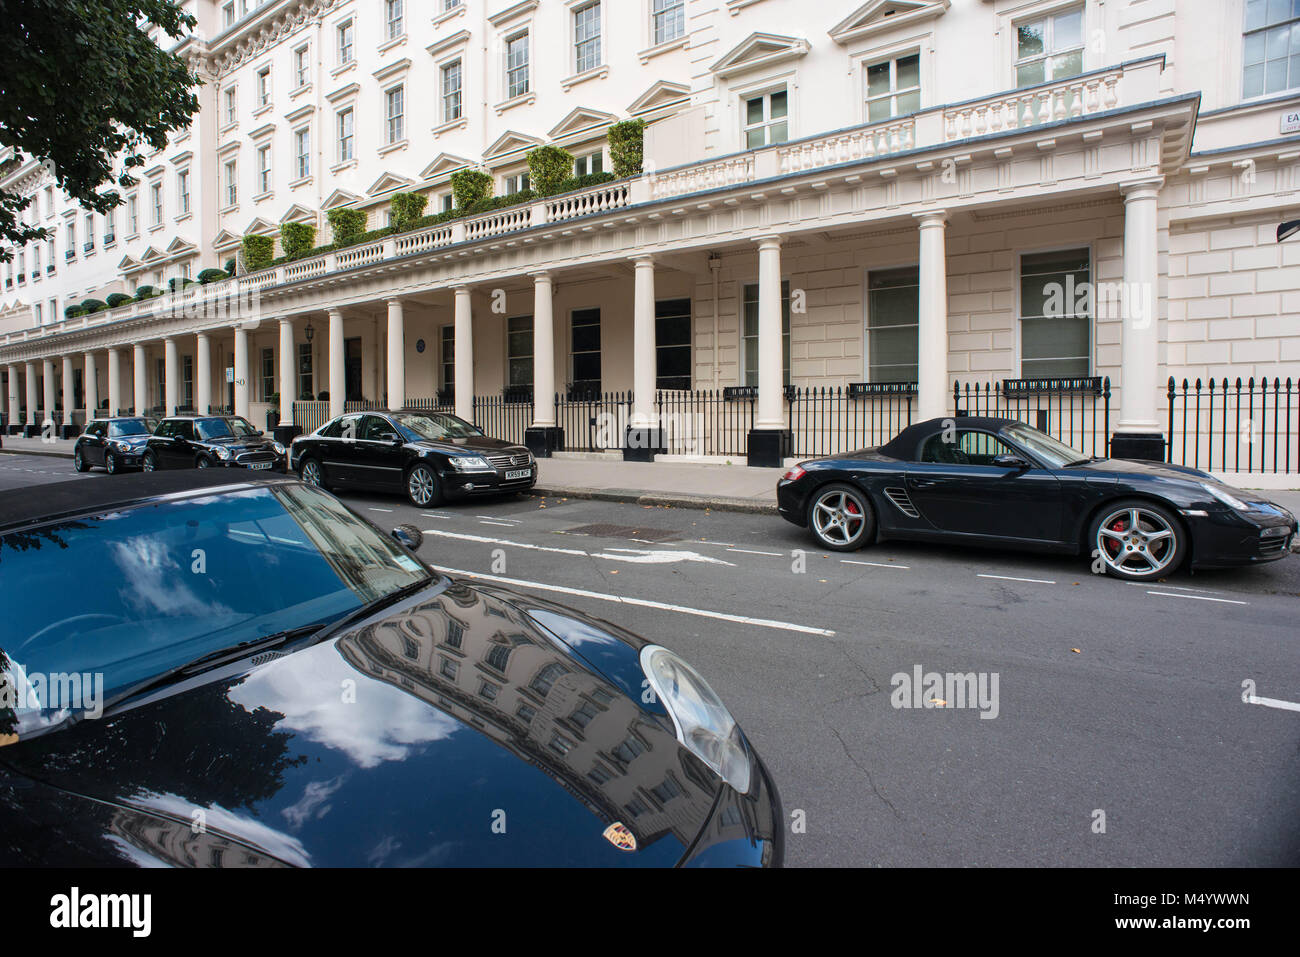 London, United Kingdom. Luxury cars in Belgravia Square. Stock Photo